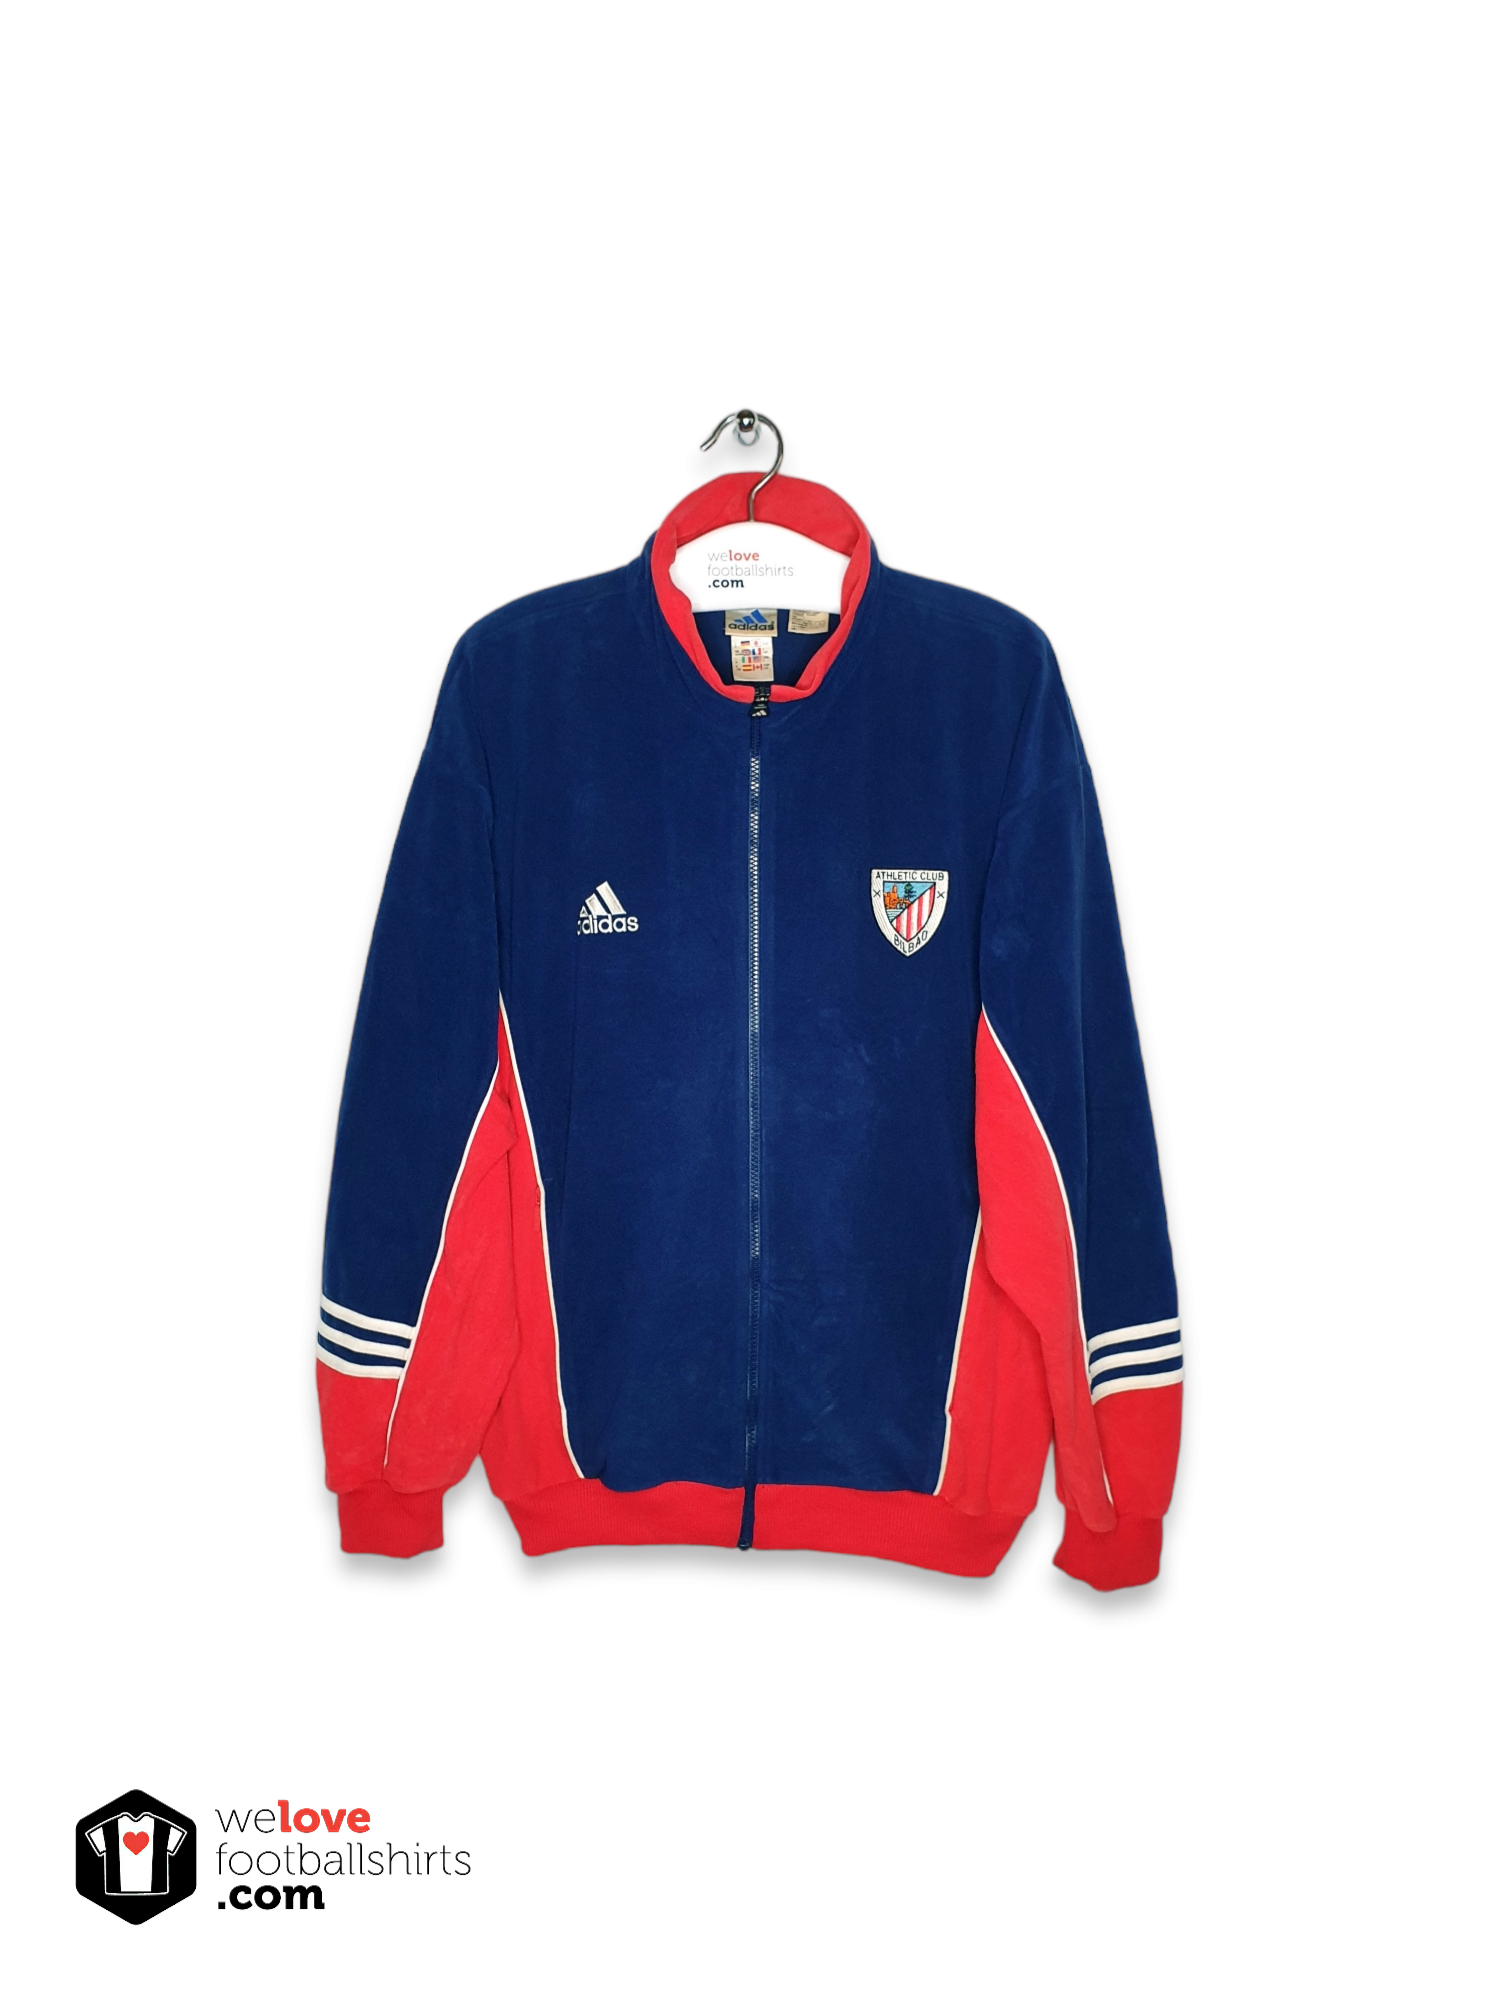 Marinero Se infla Seguro Adidas track jacket Athletic Bilbao 00s - Welovefootballshirts.com